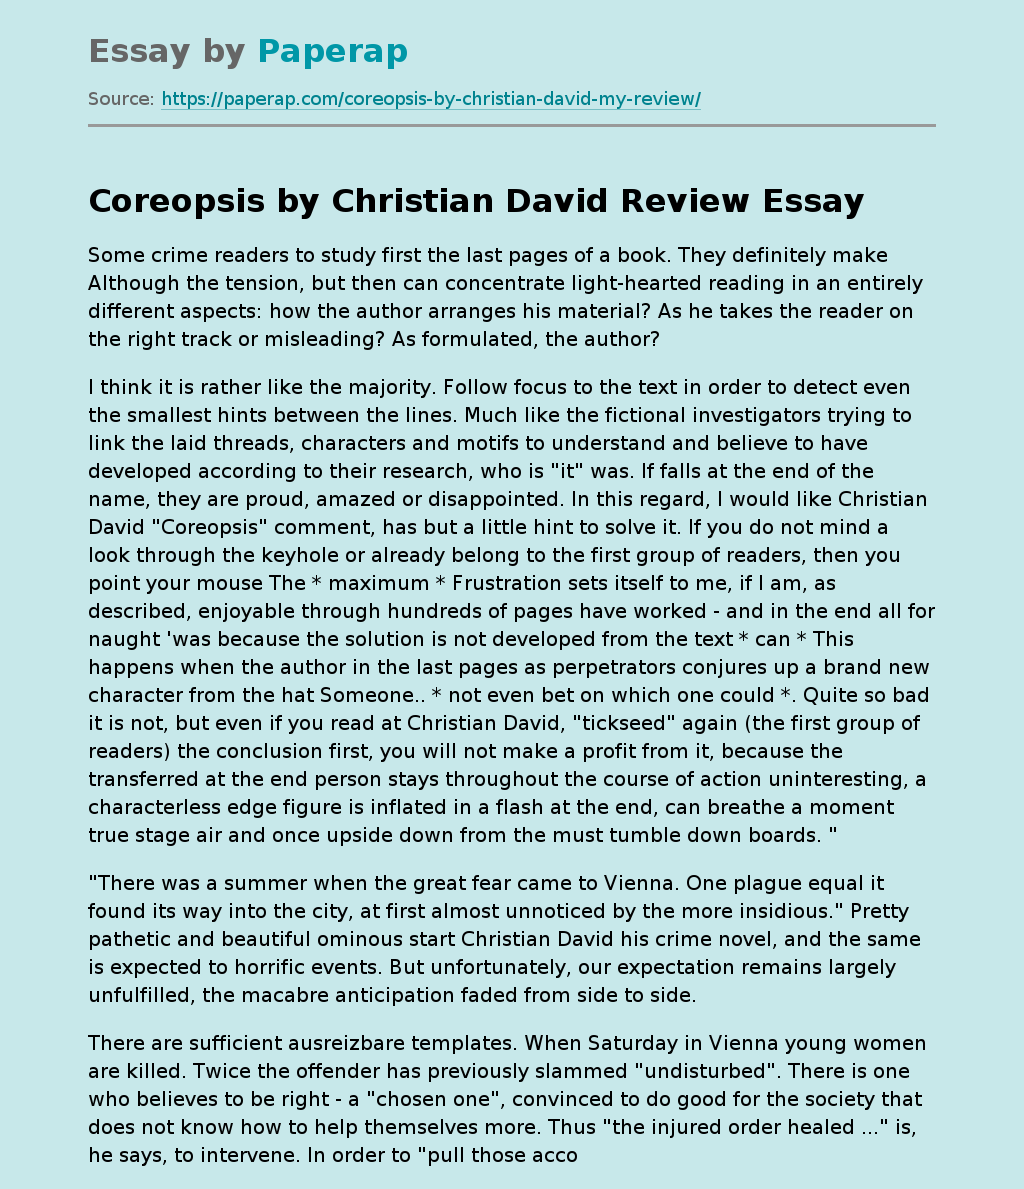 Novel "Coreopsis" by Christian David